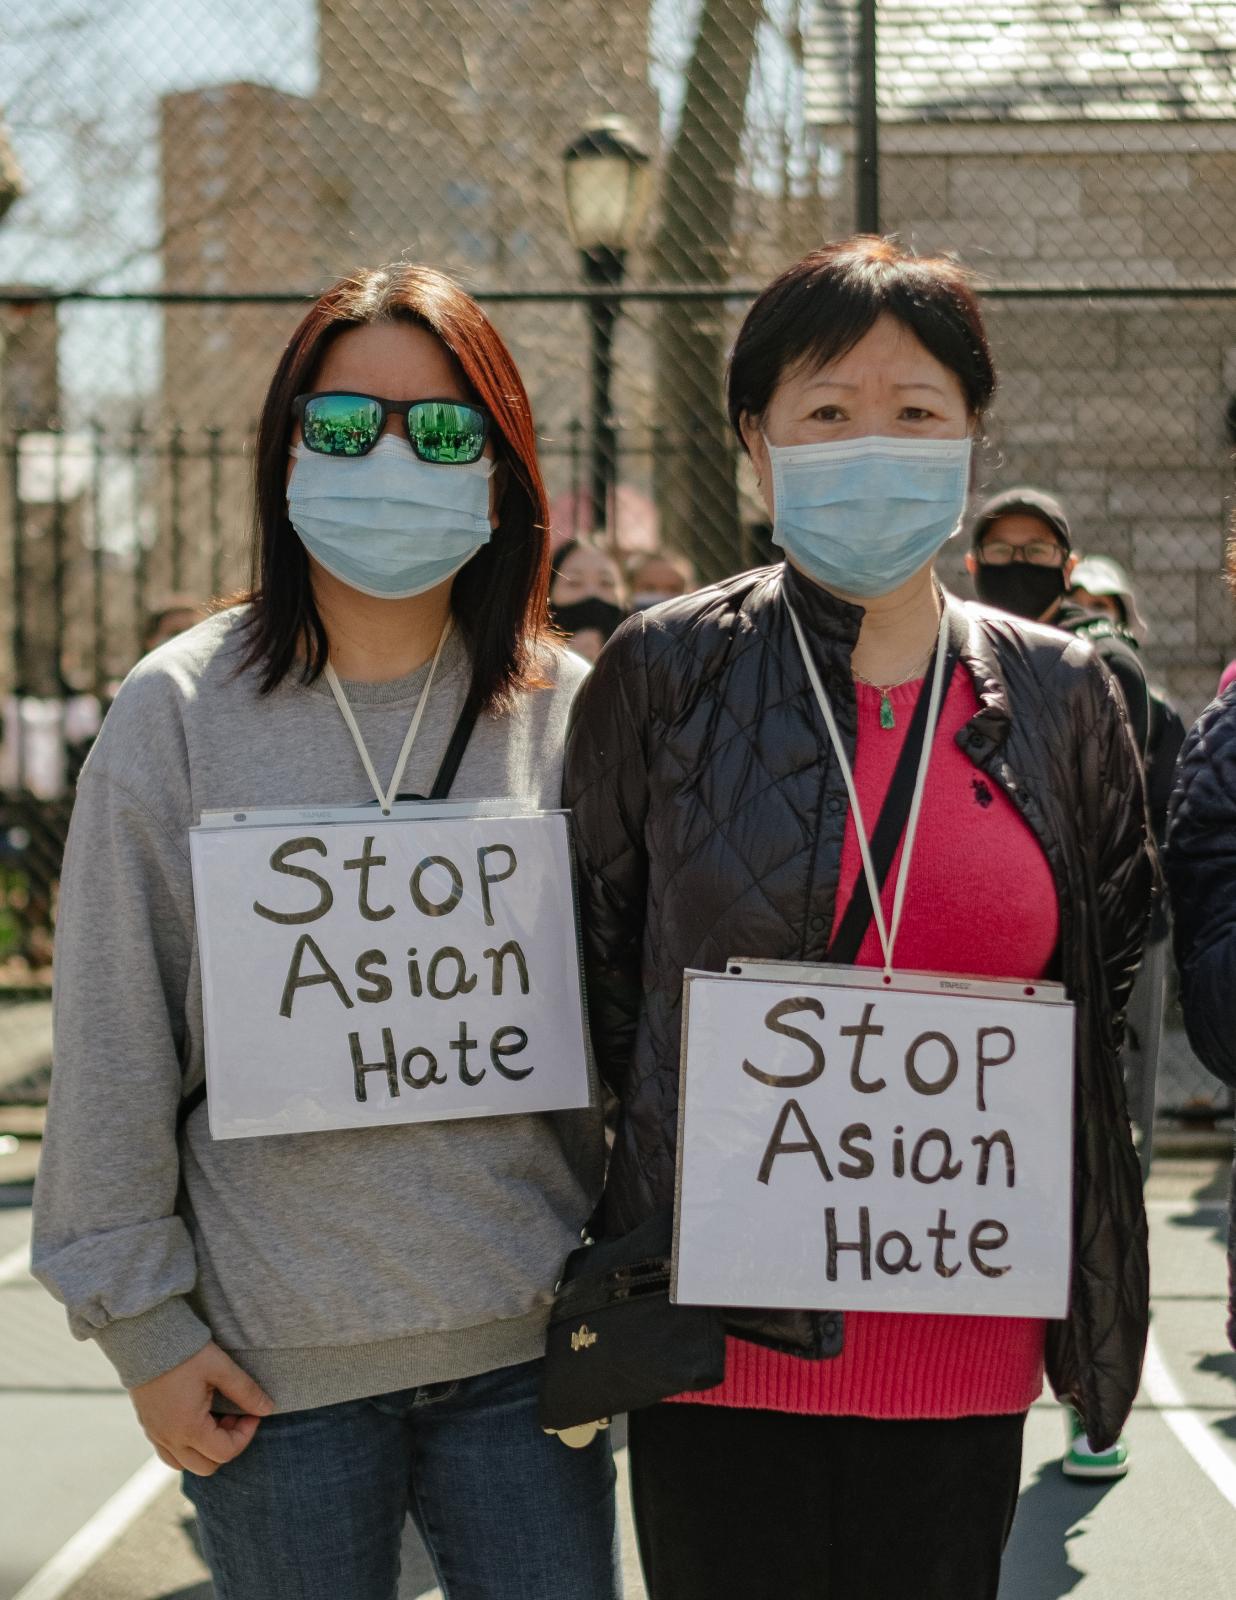 The Cut - A Day of Solidarity Amid Rising Anti-Asian Violence